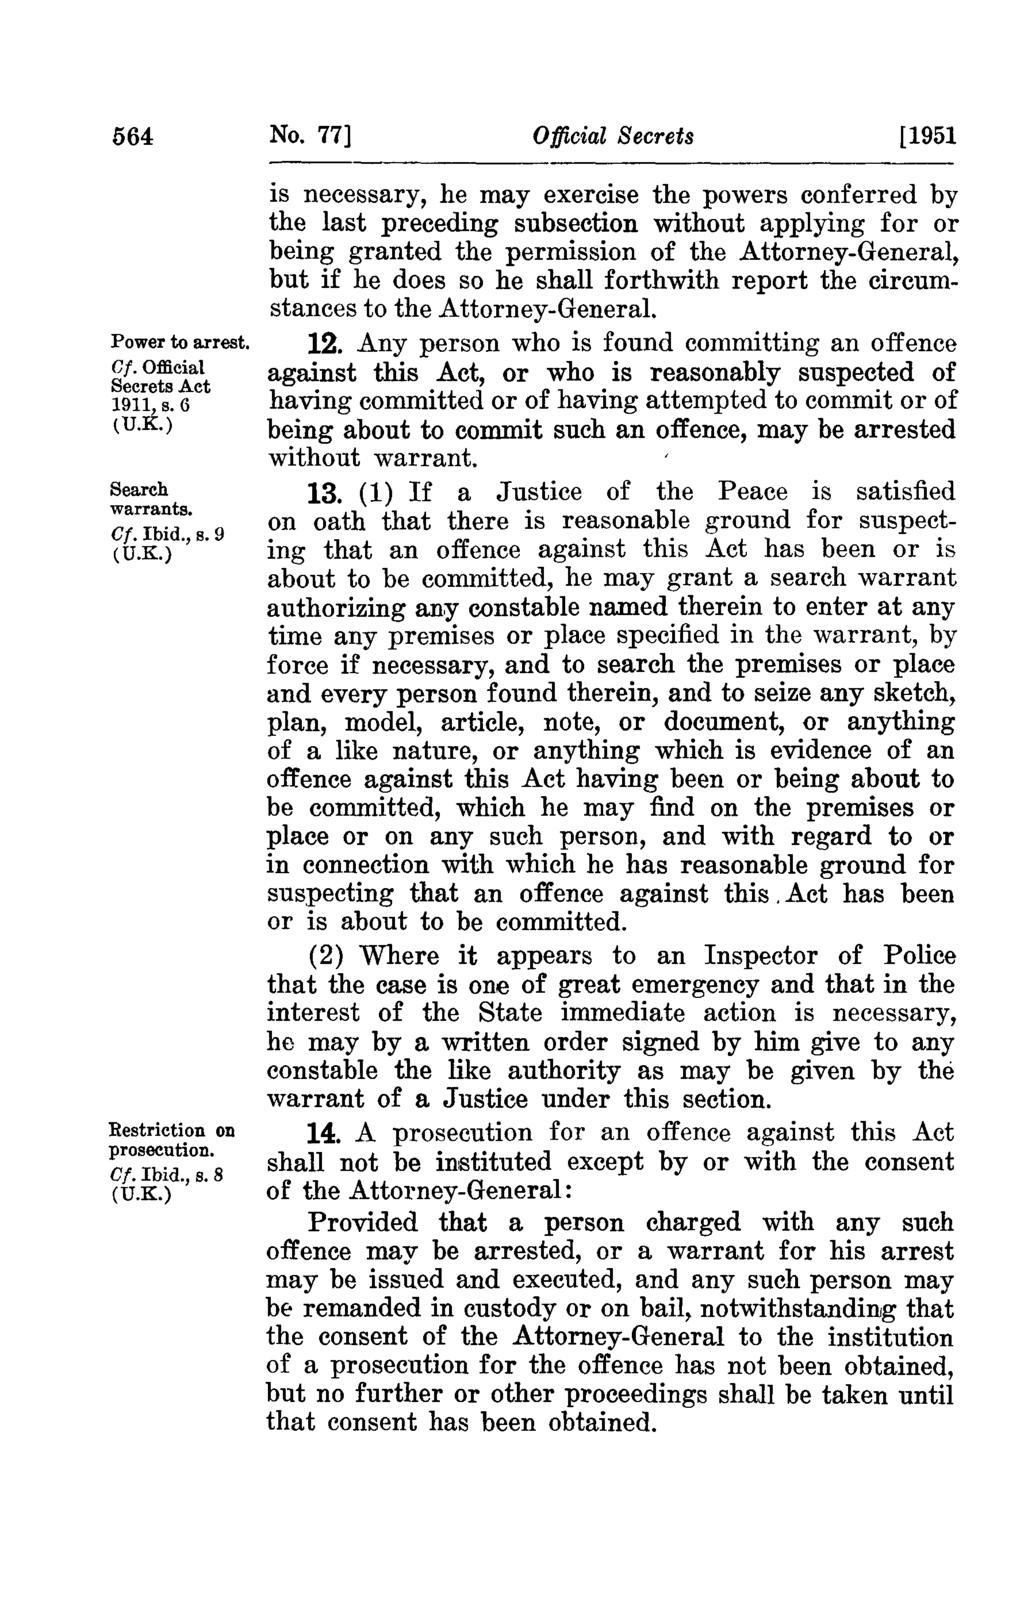 564 Power to arrest. 1911, s. 6 tu.k.) Search warrants. Cf. Ibid., s. 9 Restriction on prosecution. Cf. Ibid., s. 8 No.